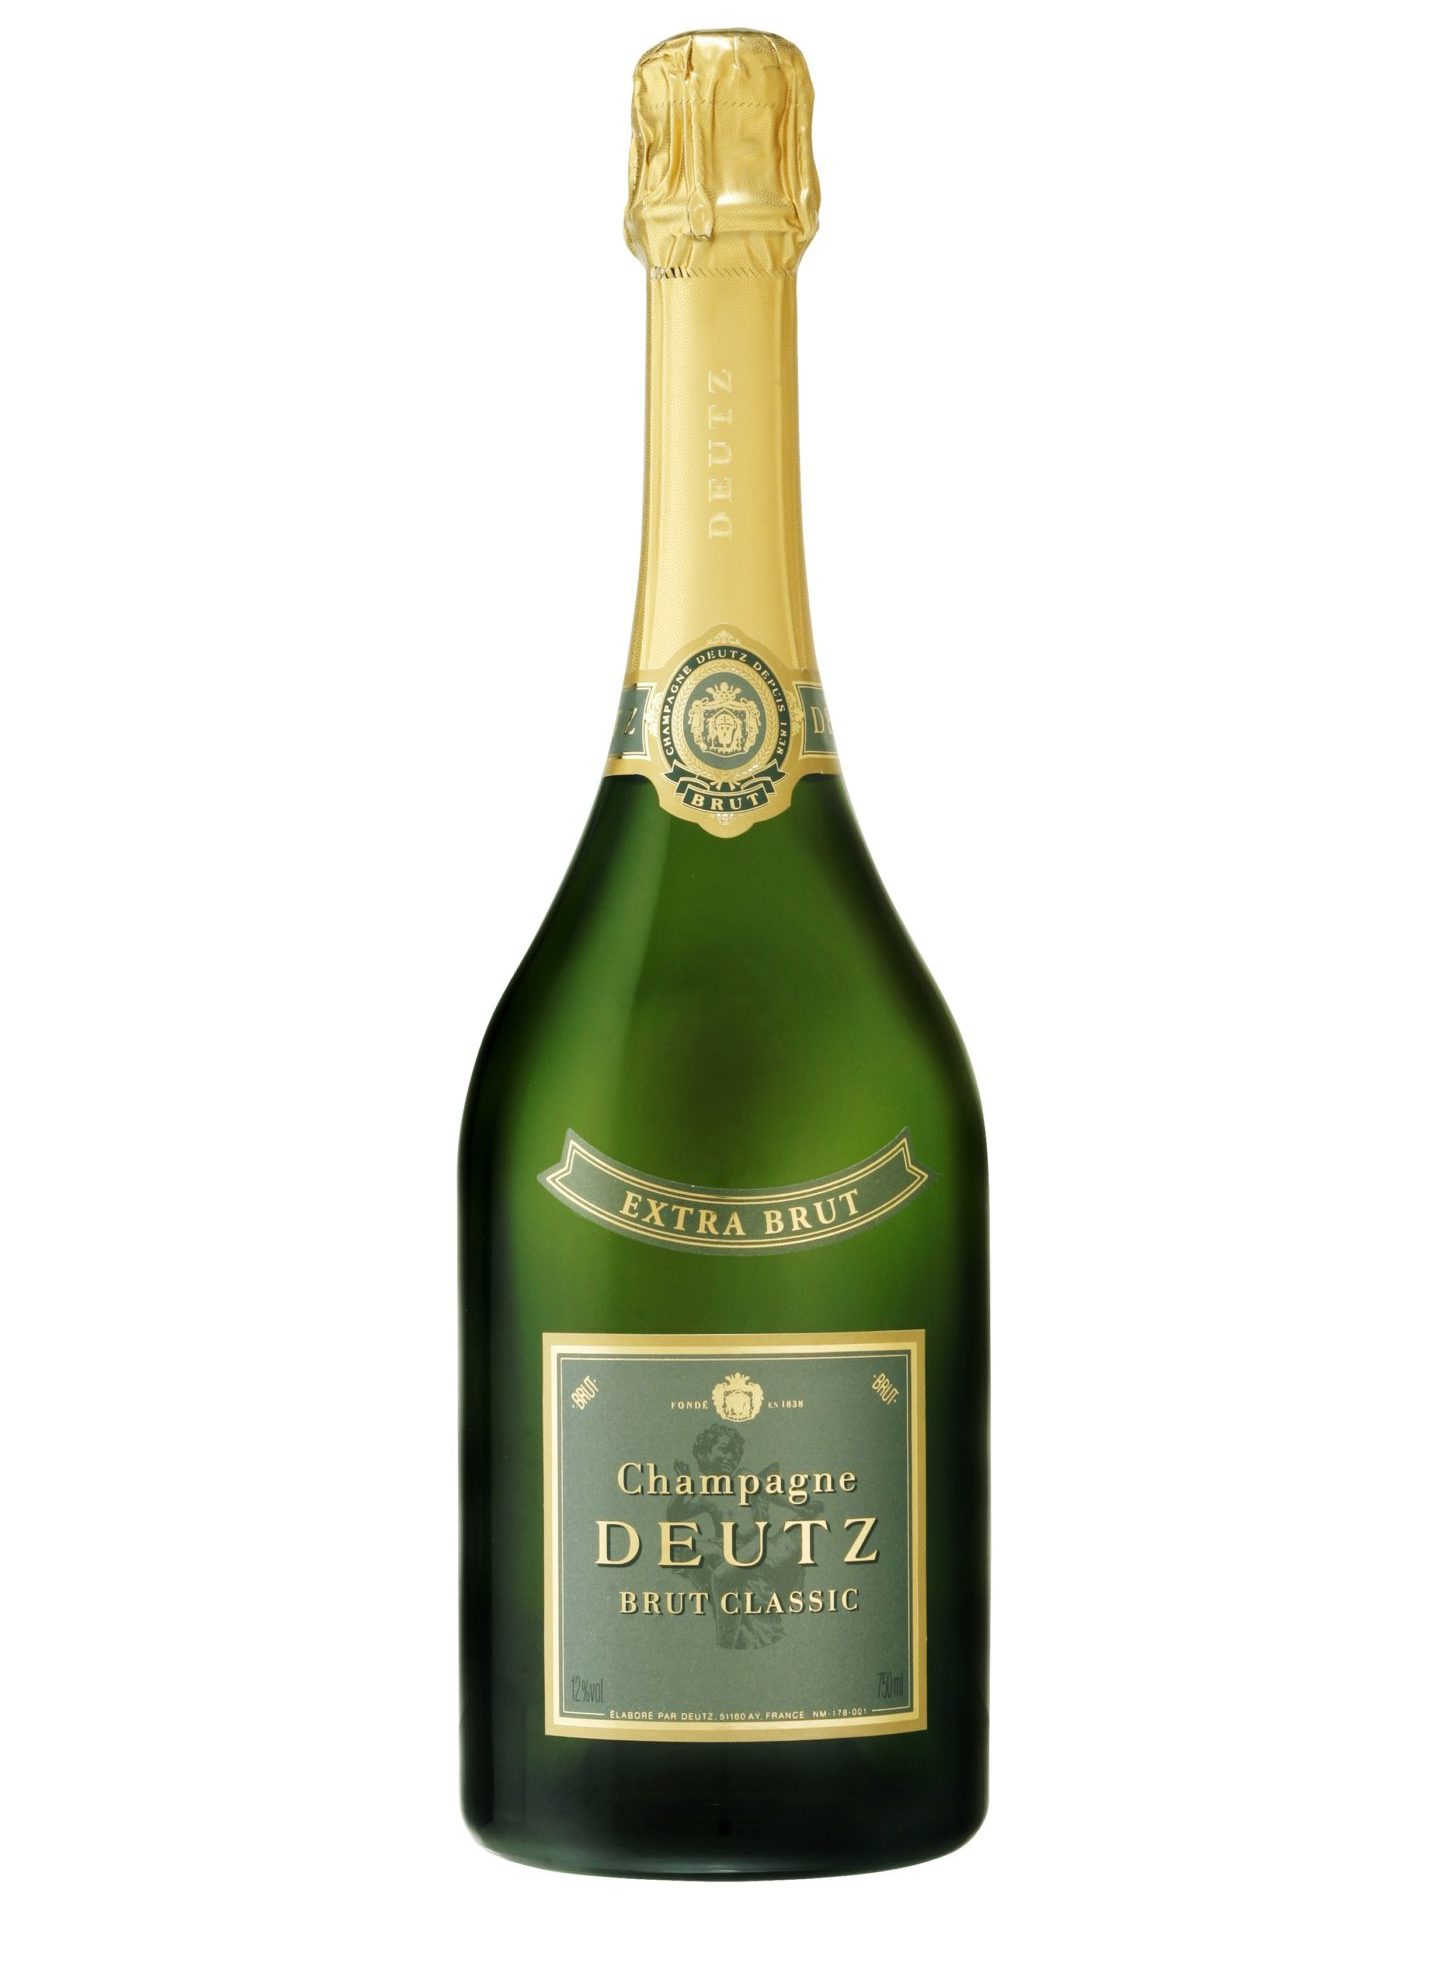 Шампань champagne. Шампанское Deutz Brut Classic. Шампанское Deutz, Brut Classic 0,75 л. Шампанское William Deutz Brut 2000. Брют Deutz Deutz Классик Brut.